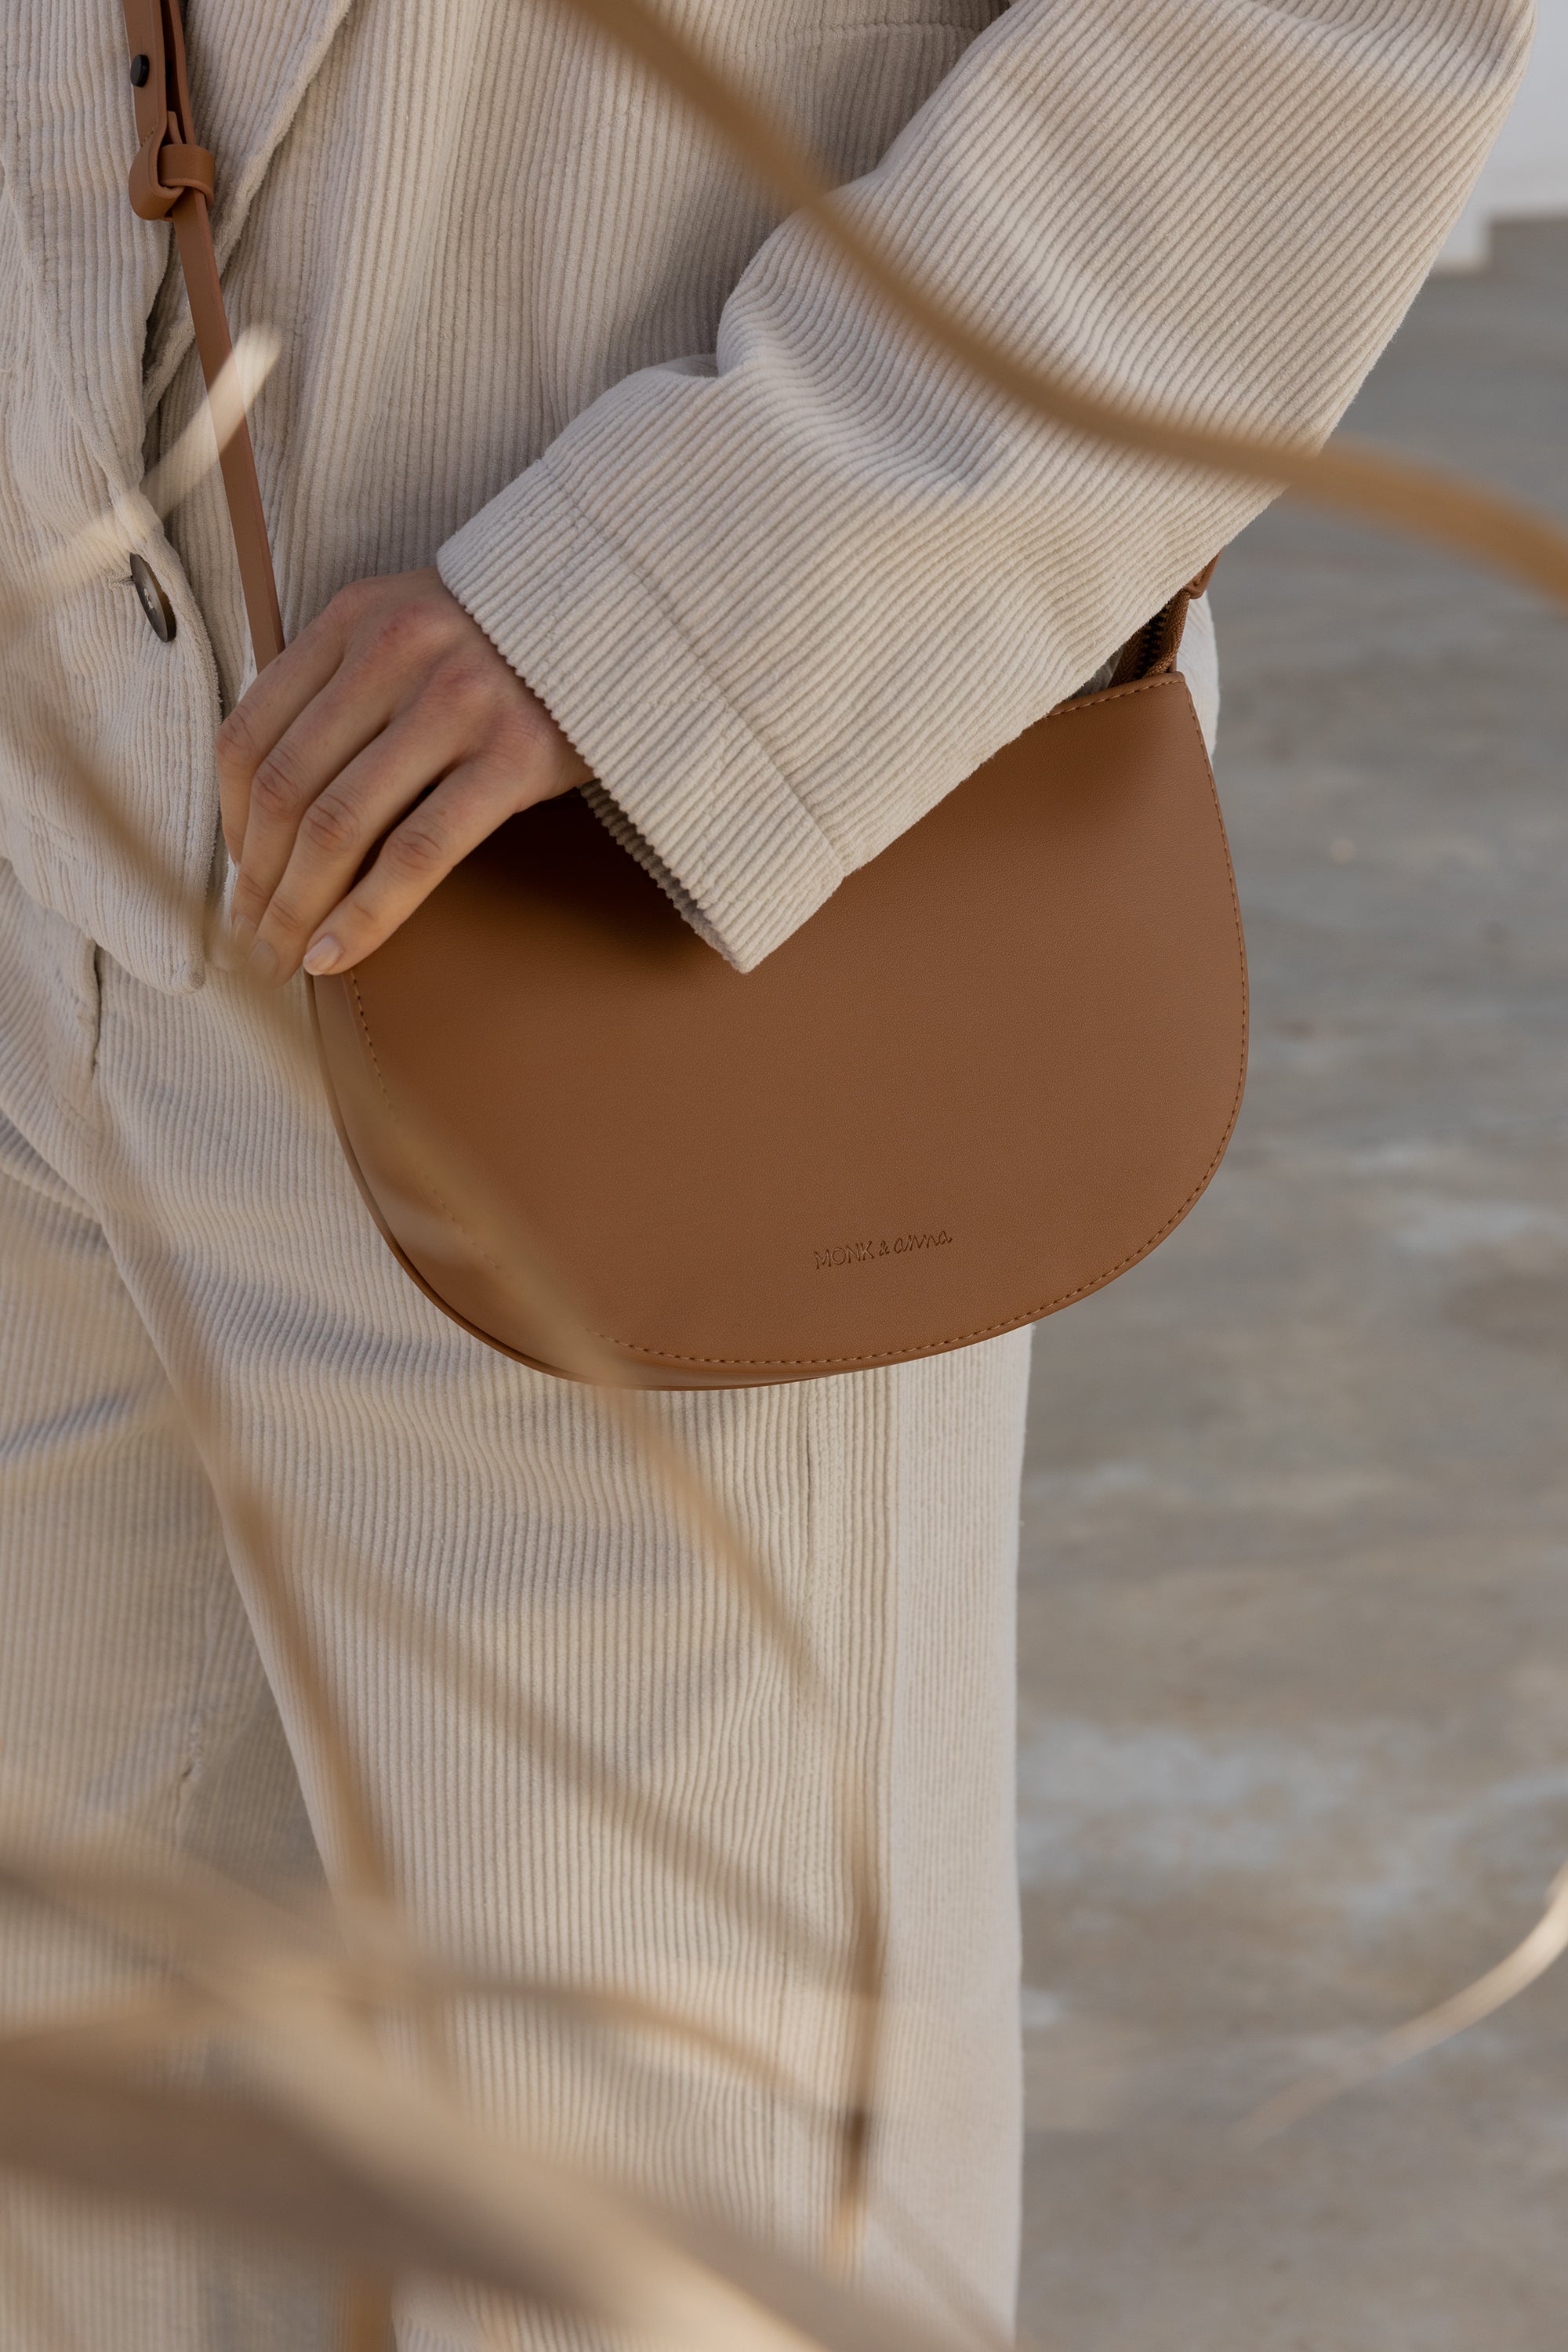 Acorn banana saddlebag | Another high quality Acorn bag. Thi… | Flickr